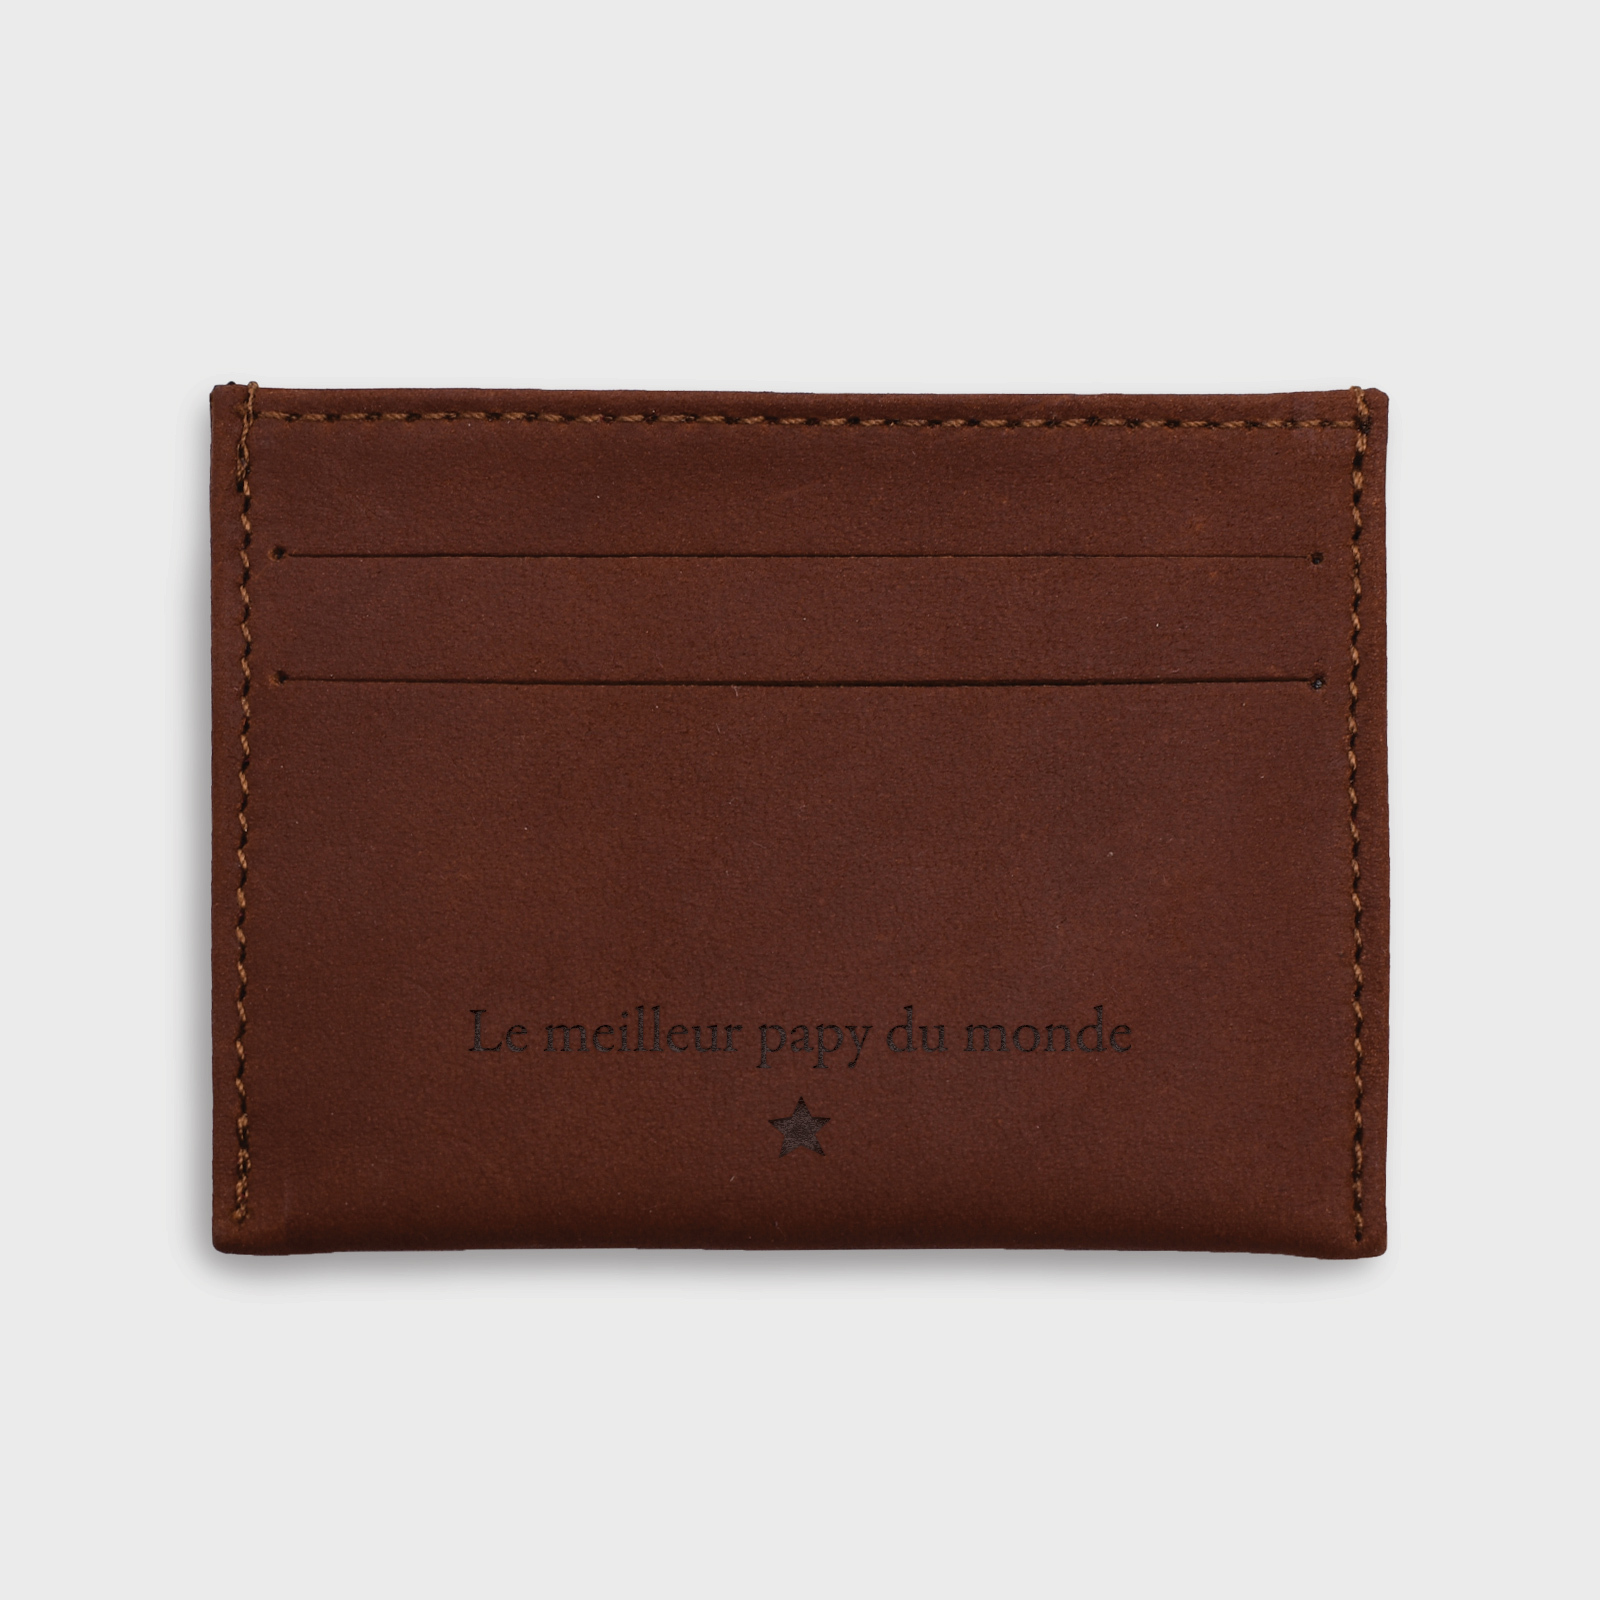 Customised leather card holder